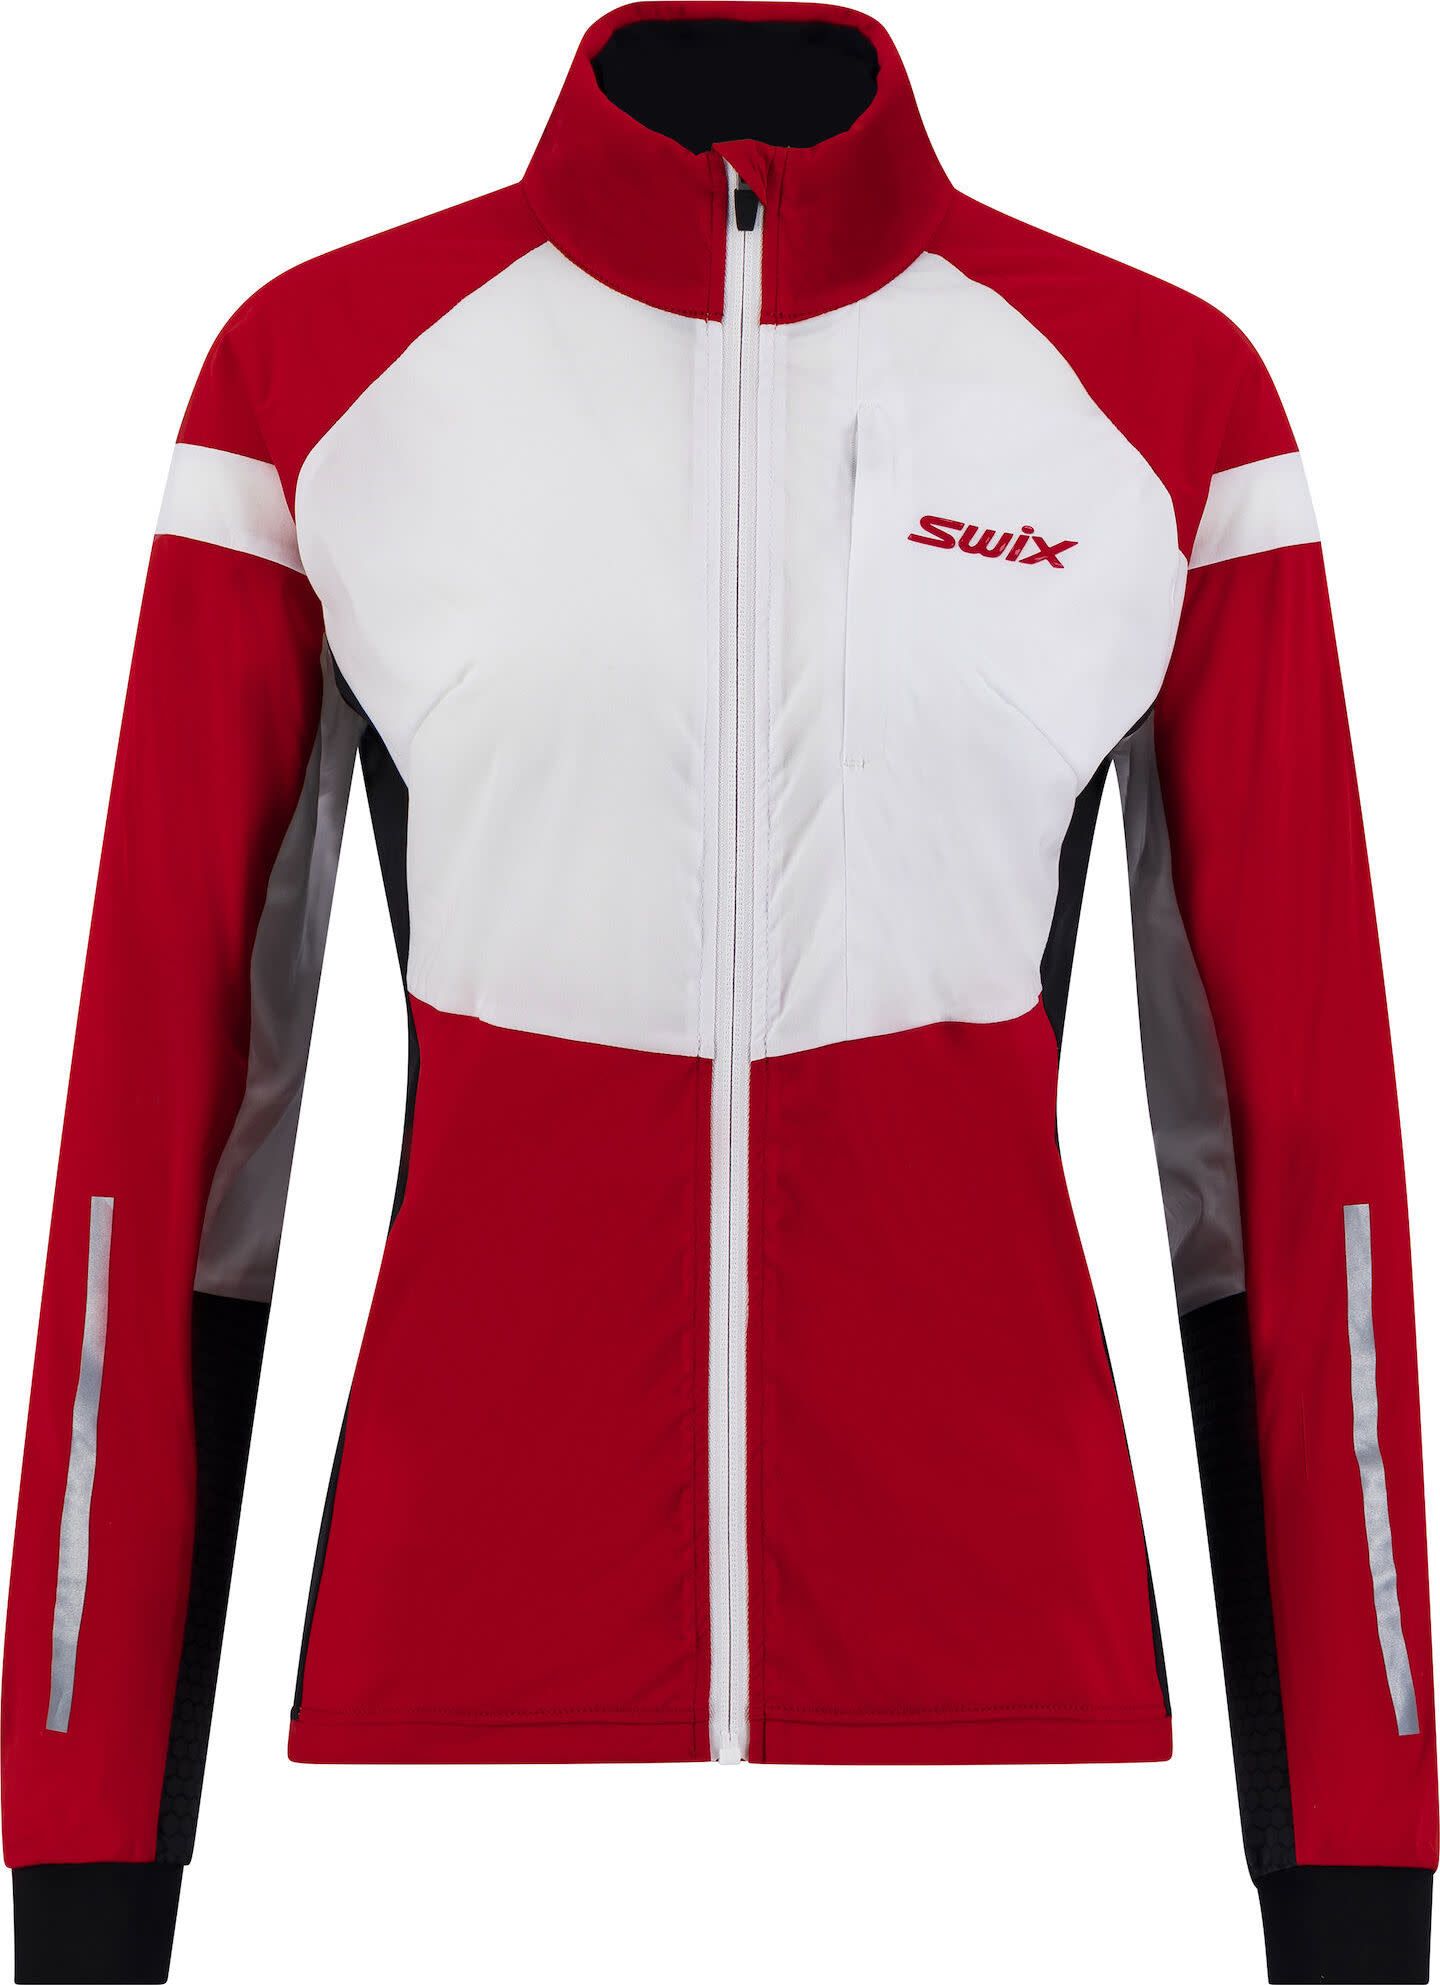 Women's Quantum Performance Jacket Swix red